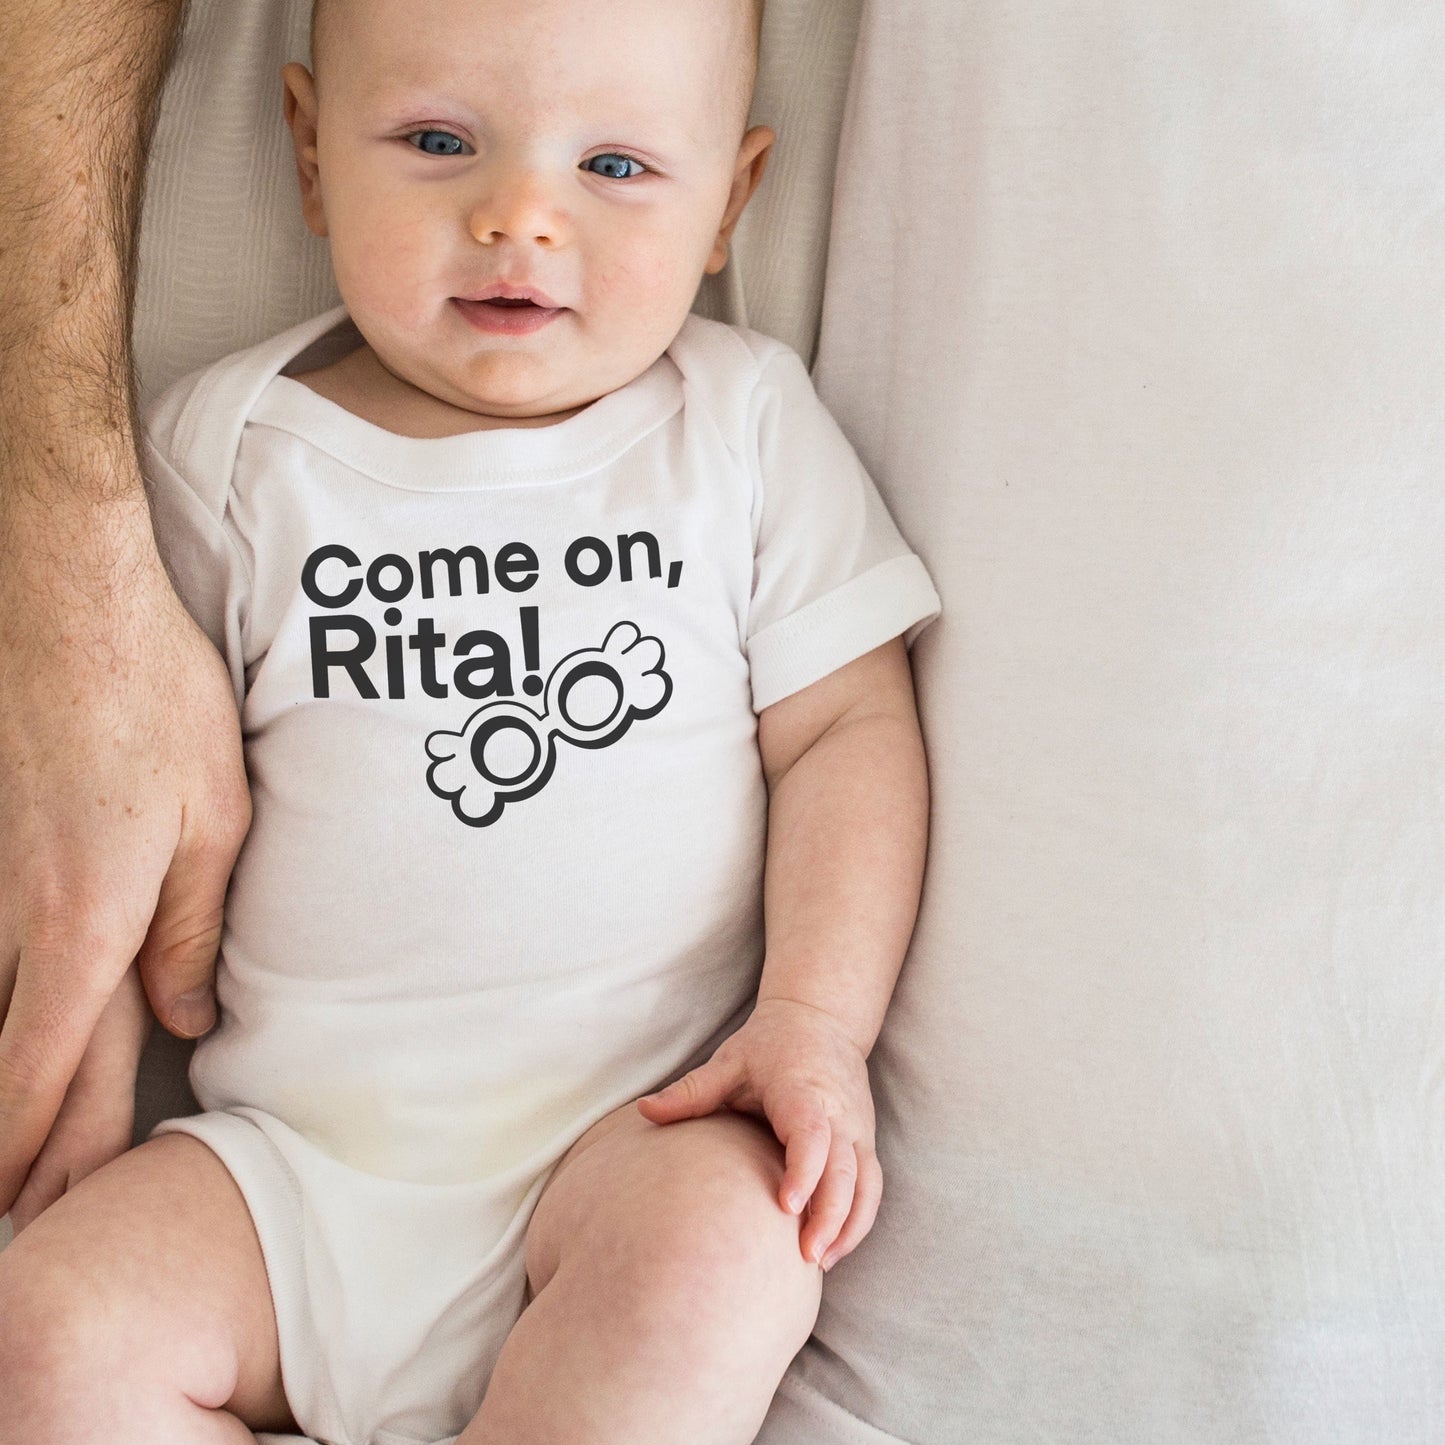 Come On Rita Shirt | Grannies Shirt (Coordinates to “Okay Janet” Shirt) Bluey Inspired Shirt | Sisters Shirts | Besties Matching Shirt | Family Matching Shirts | Sizes For Babies To Adults